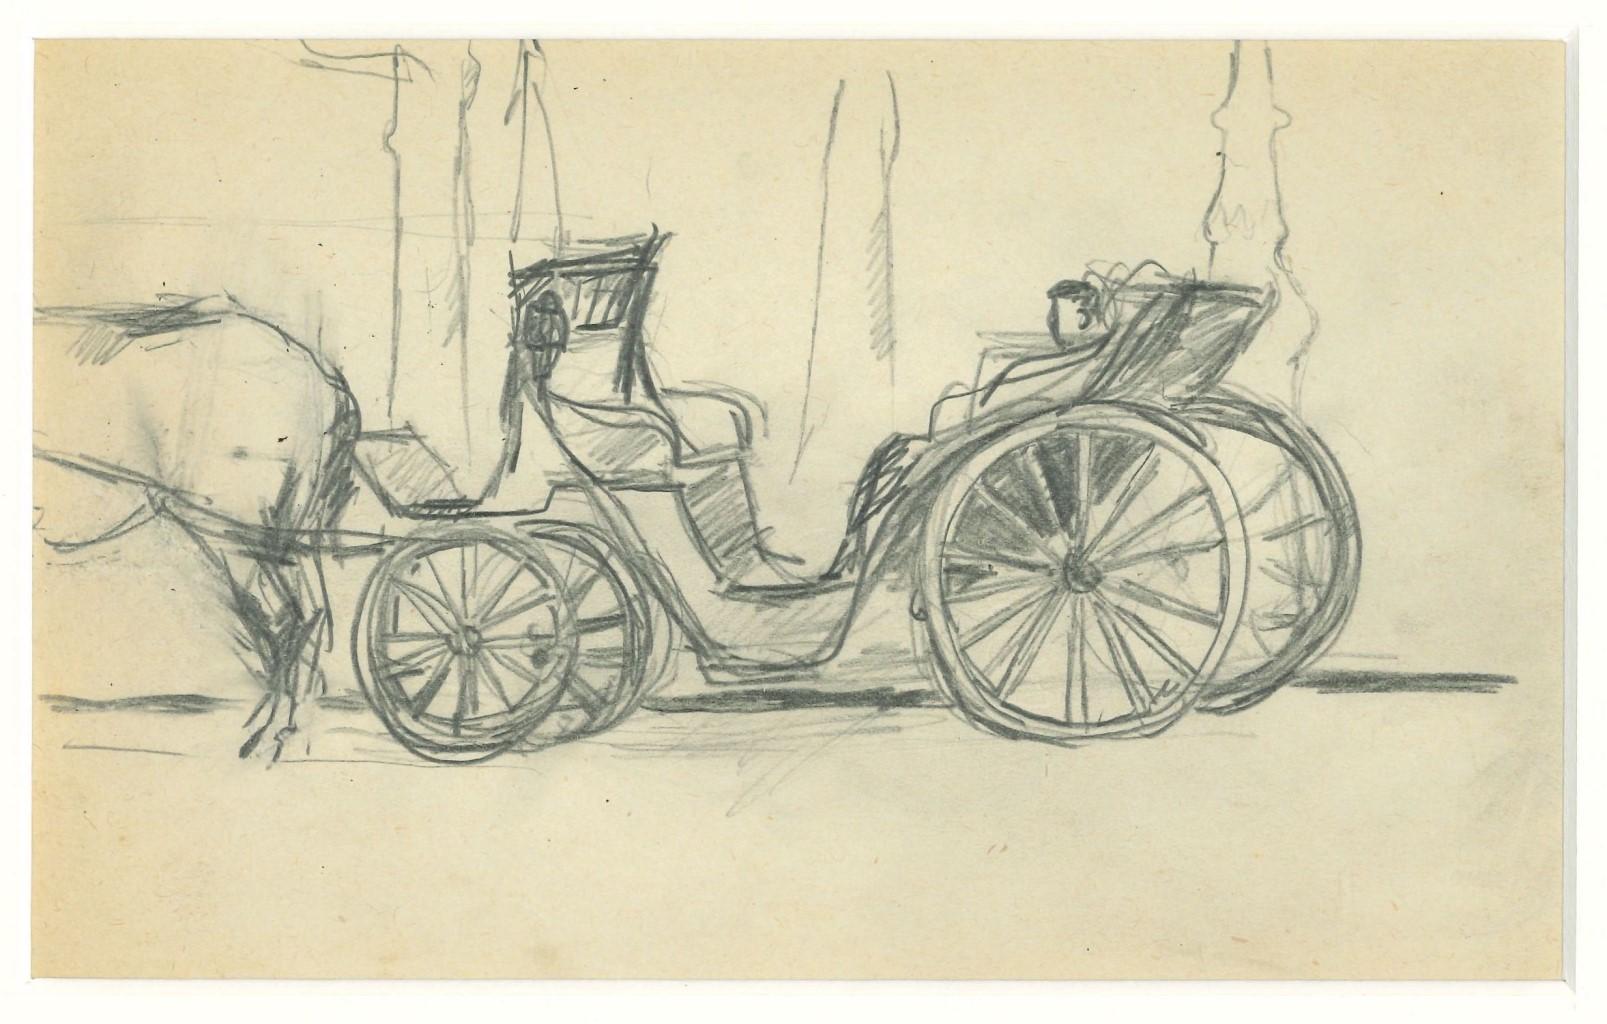 chariot drawing